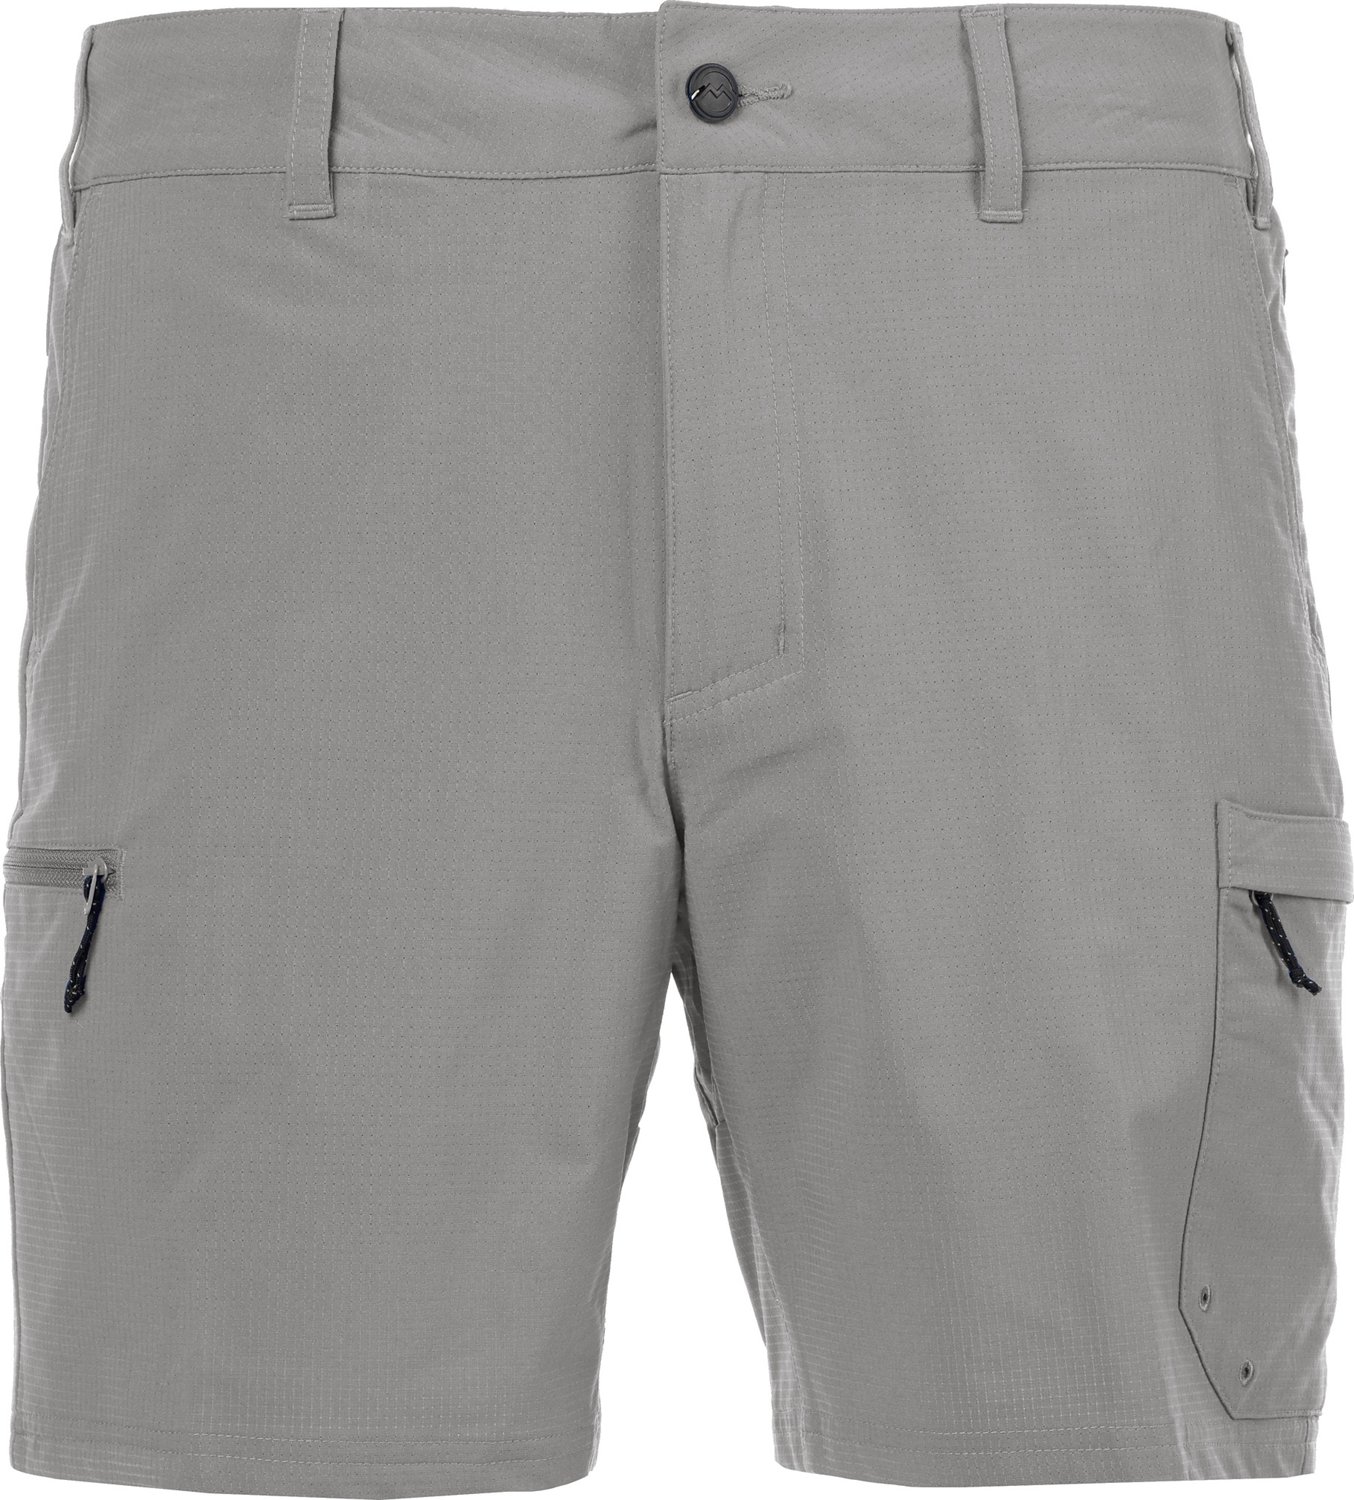 Magellan Outdoors Men's Pro Angler Hybrid Shorts 7